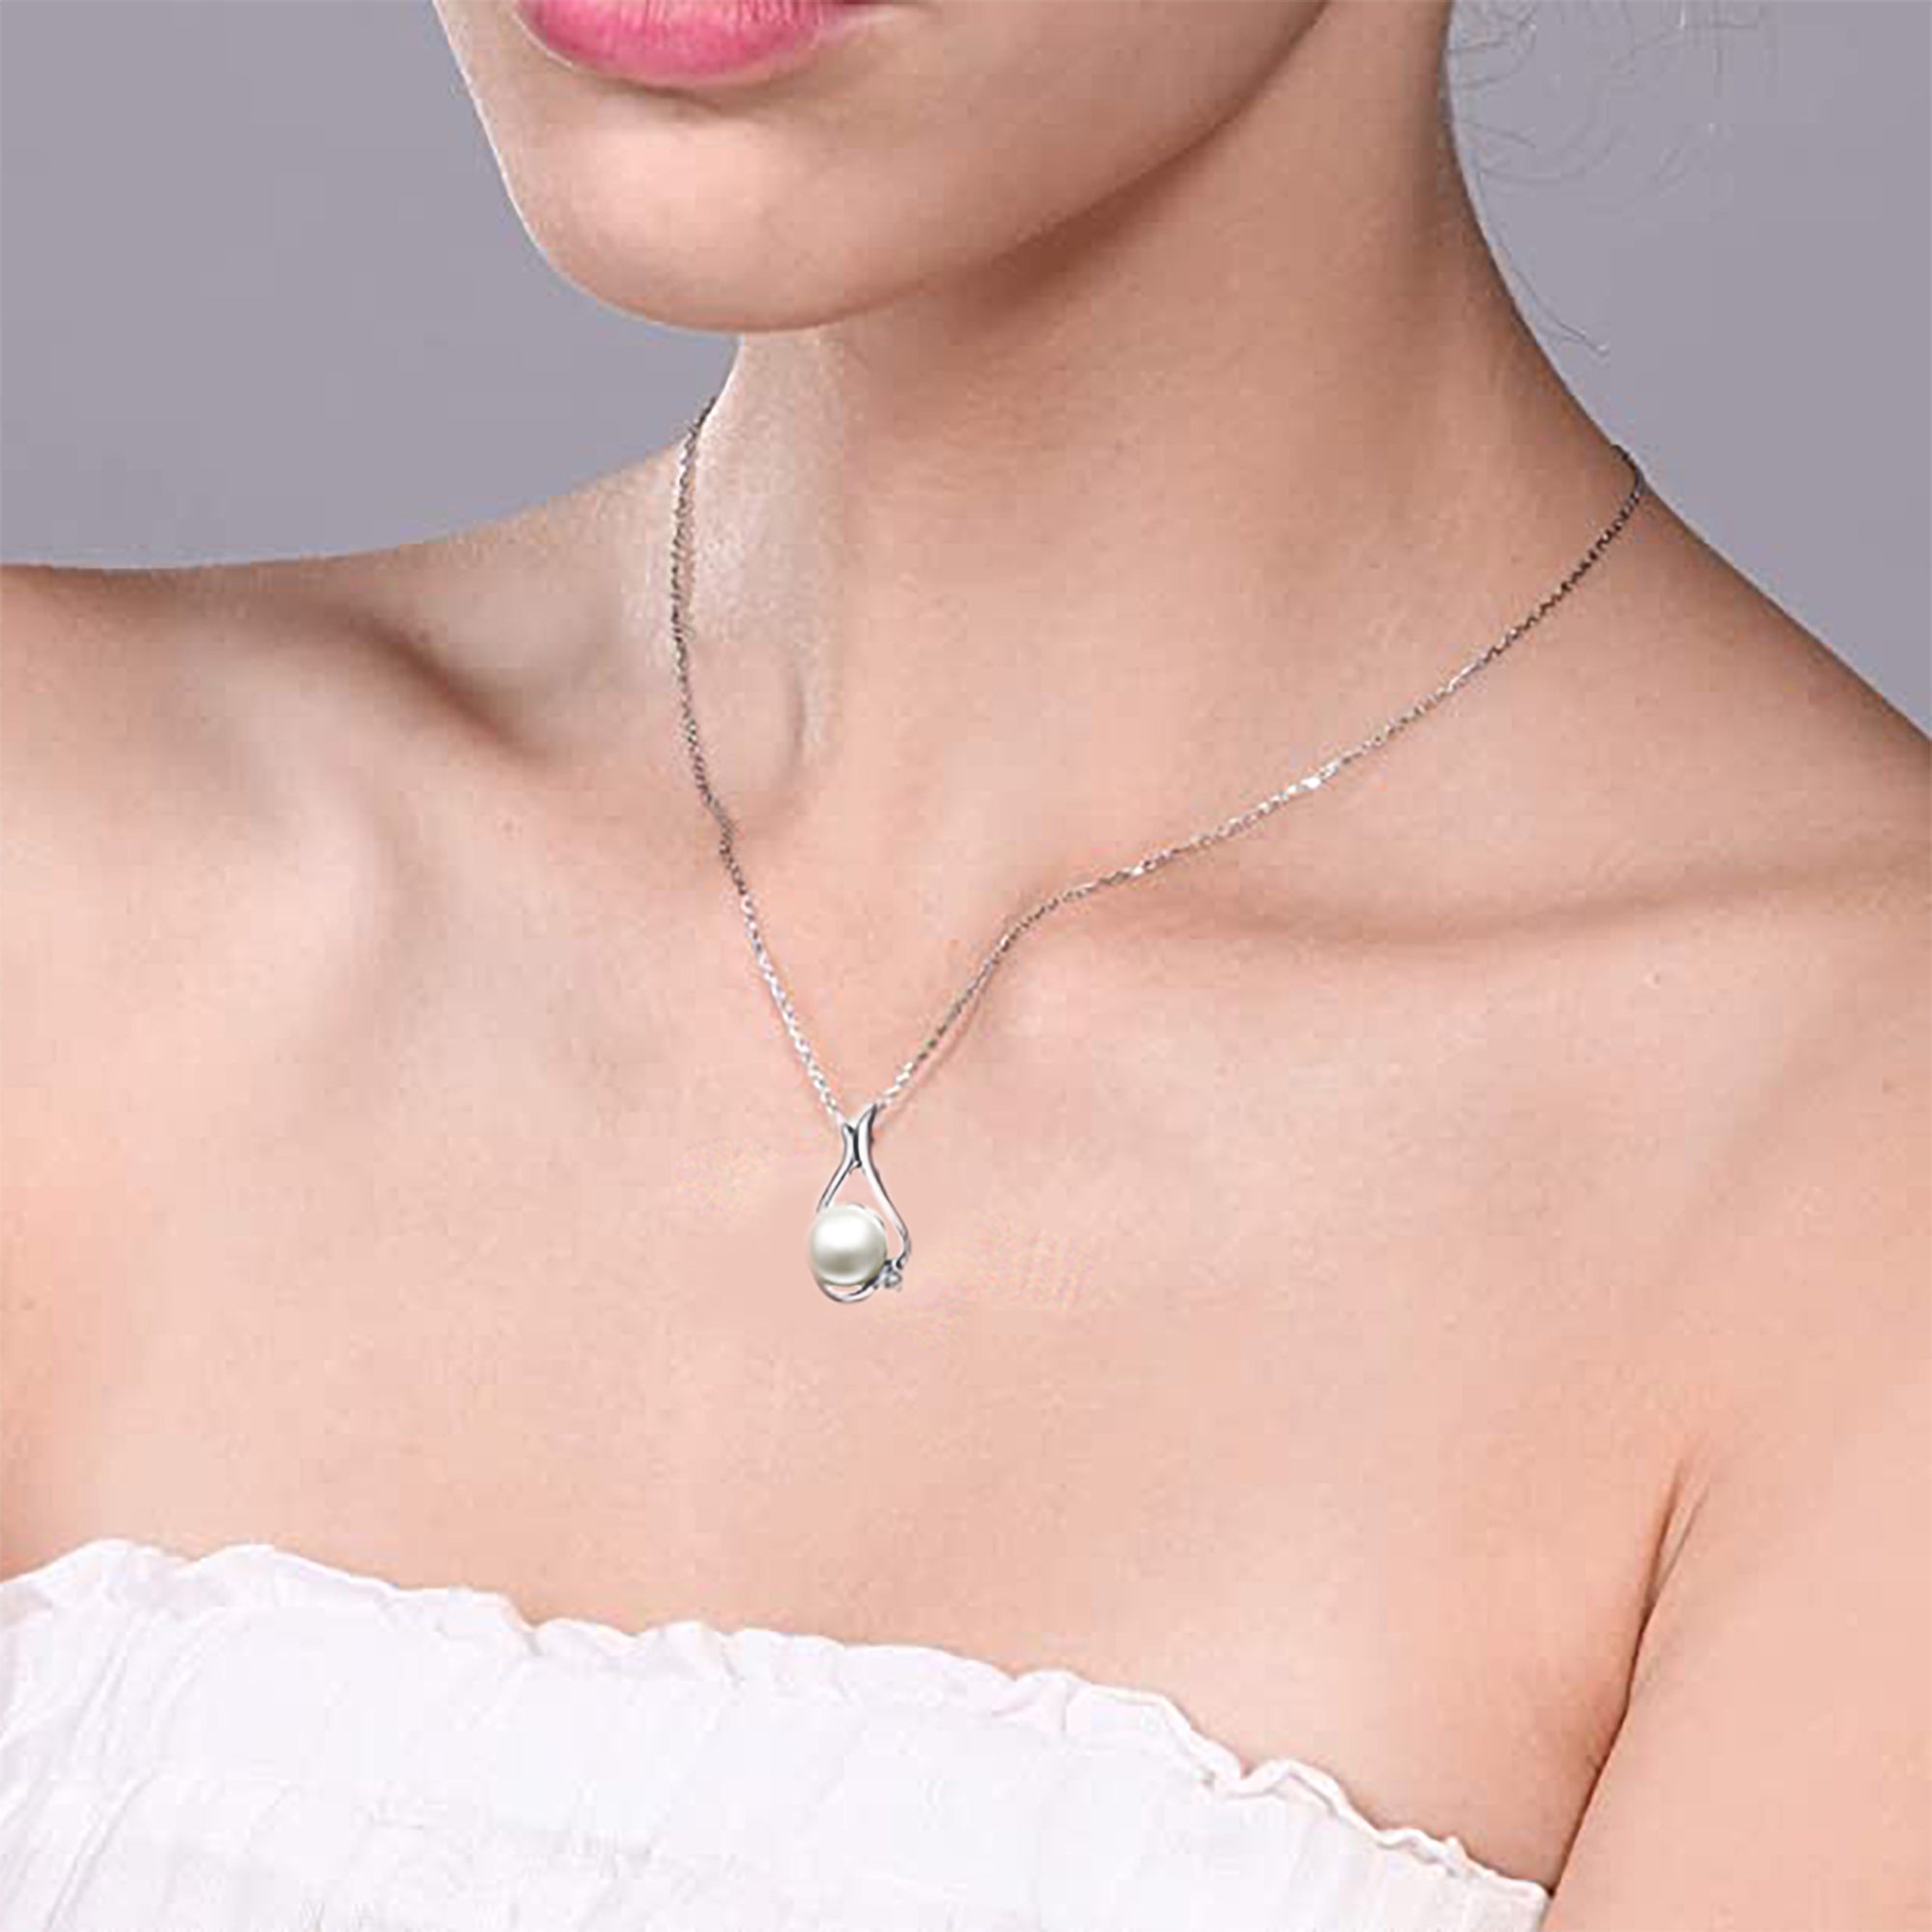 Women's Classic 925 Sterling Silver Pearl in a Tulip Pendant